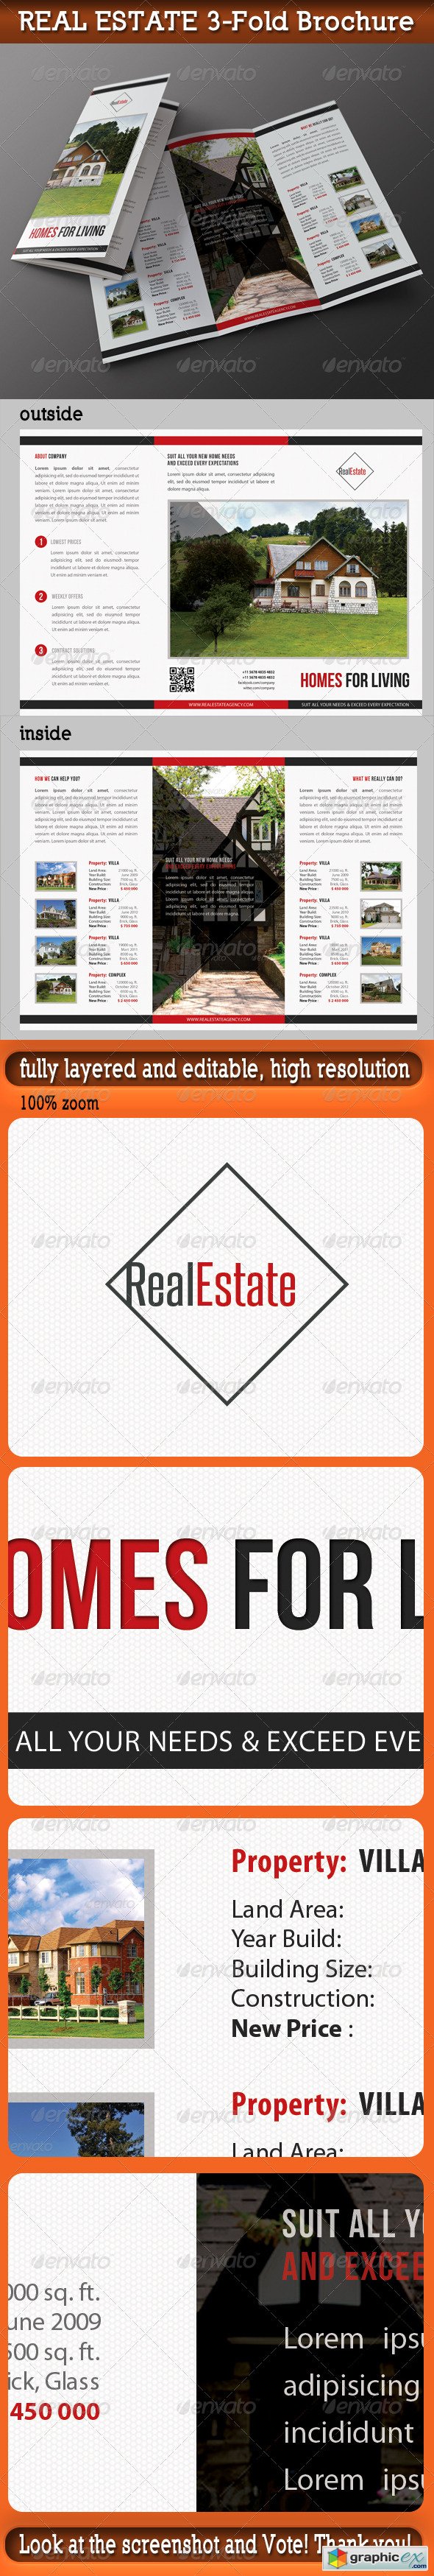 Real Estate 3-Fold Brochure 01